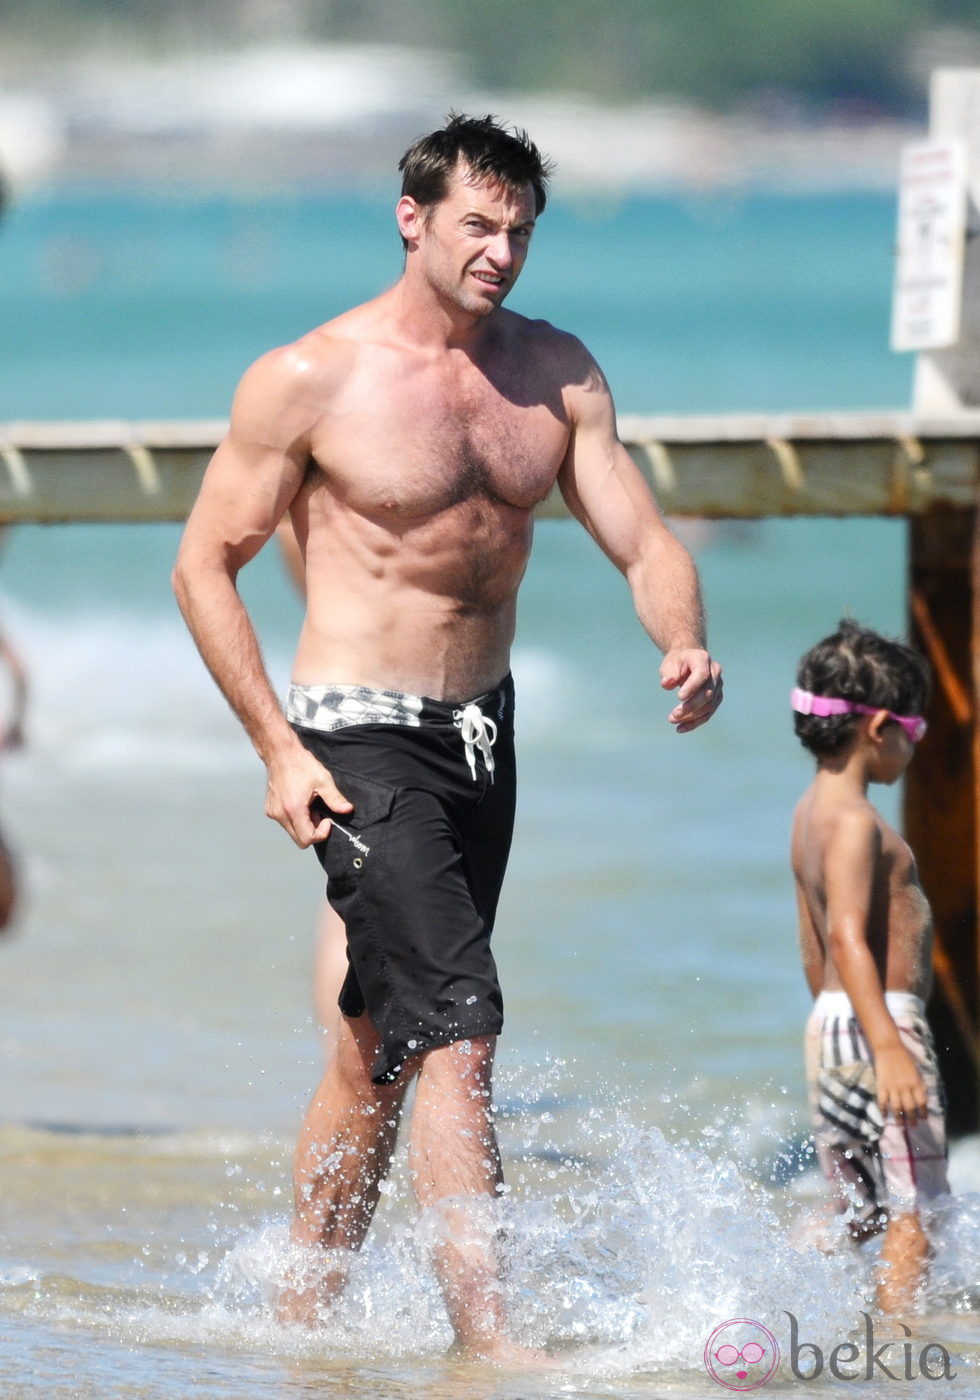 Hugh Jackman luce su torso desnudo por la orilla en Saint-Tropez